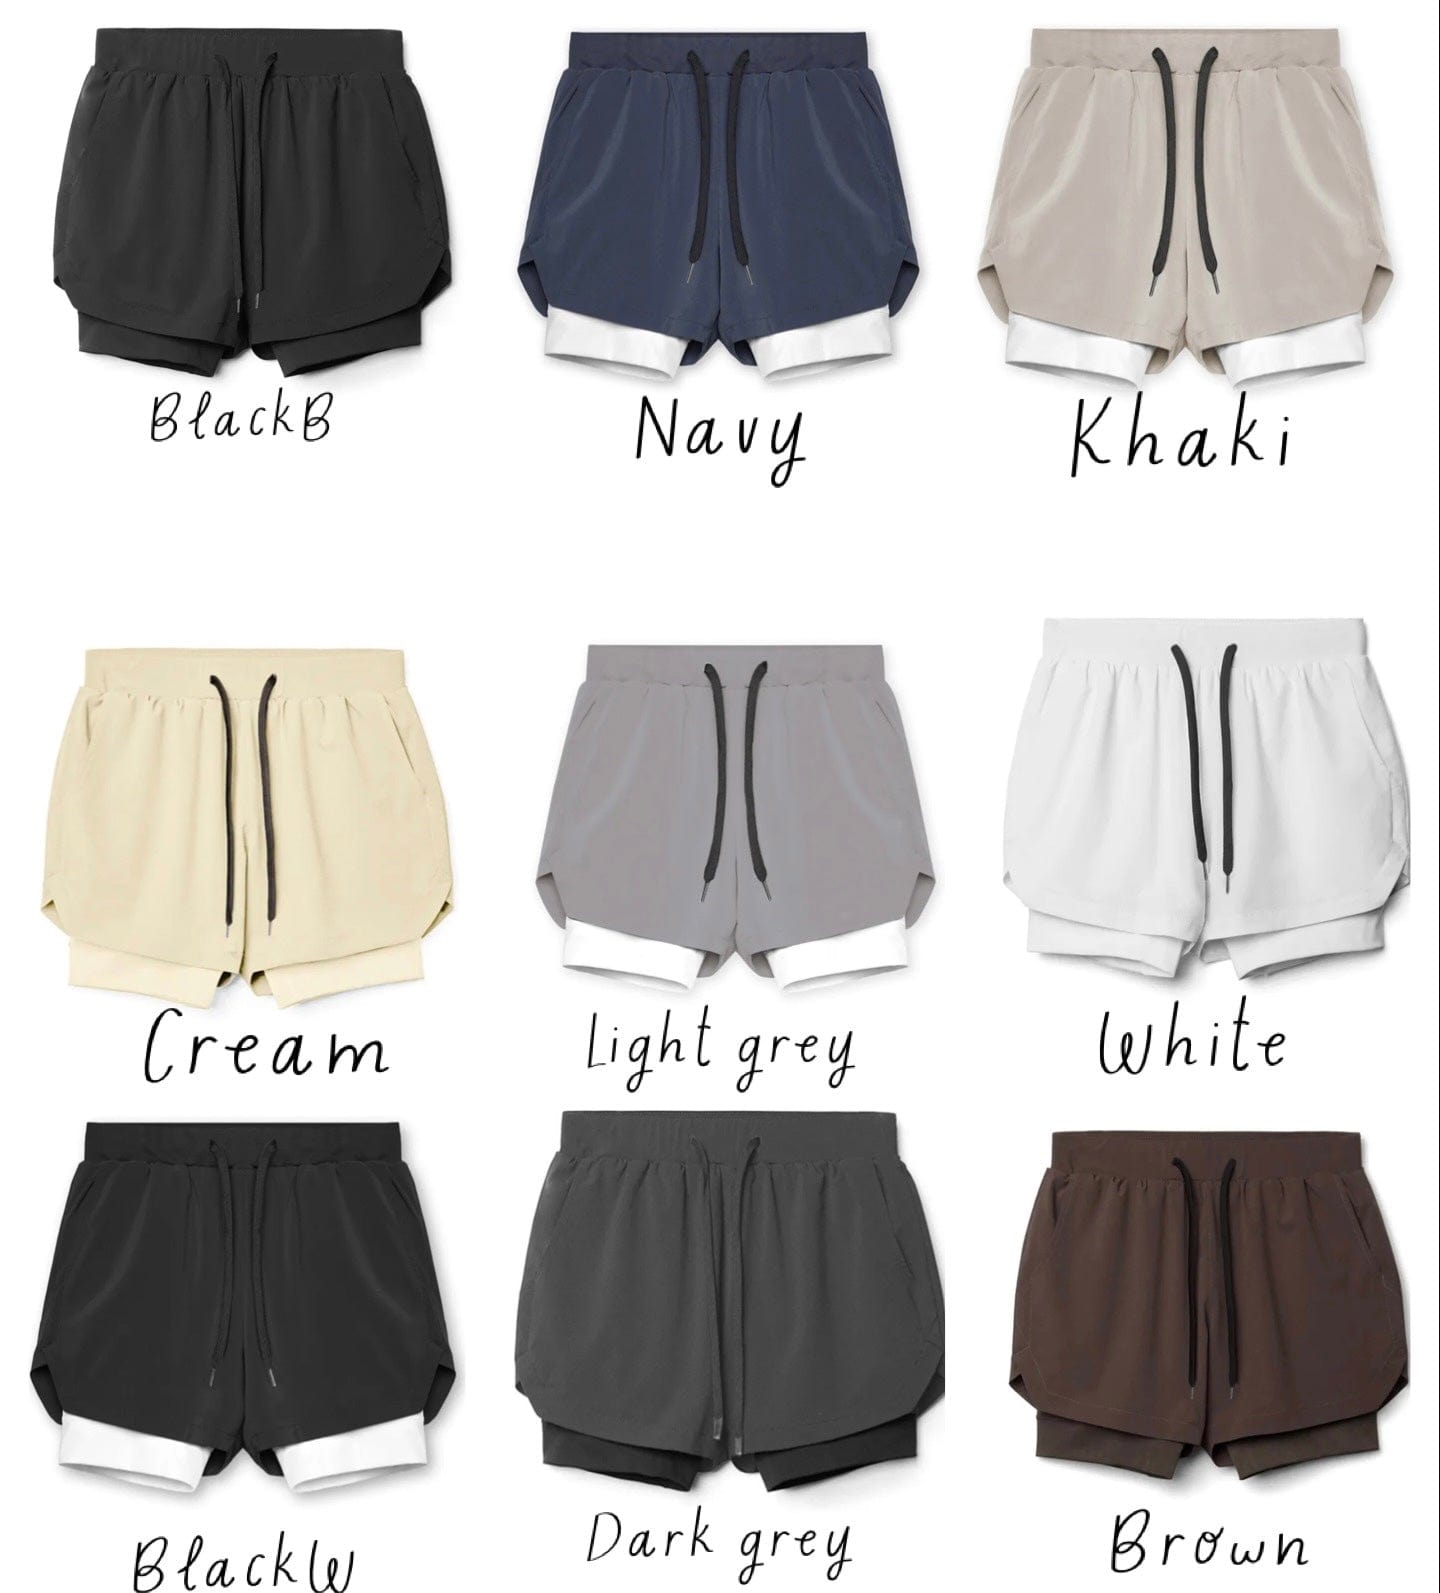 Essential 5” men shorts ( 7” lining)